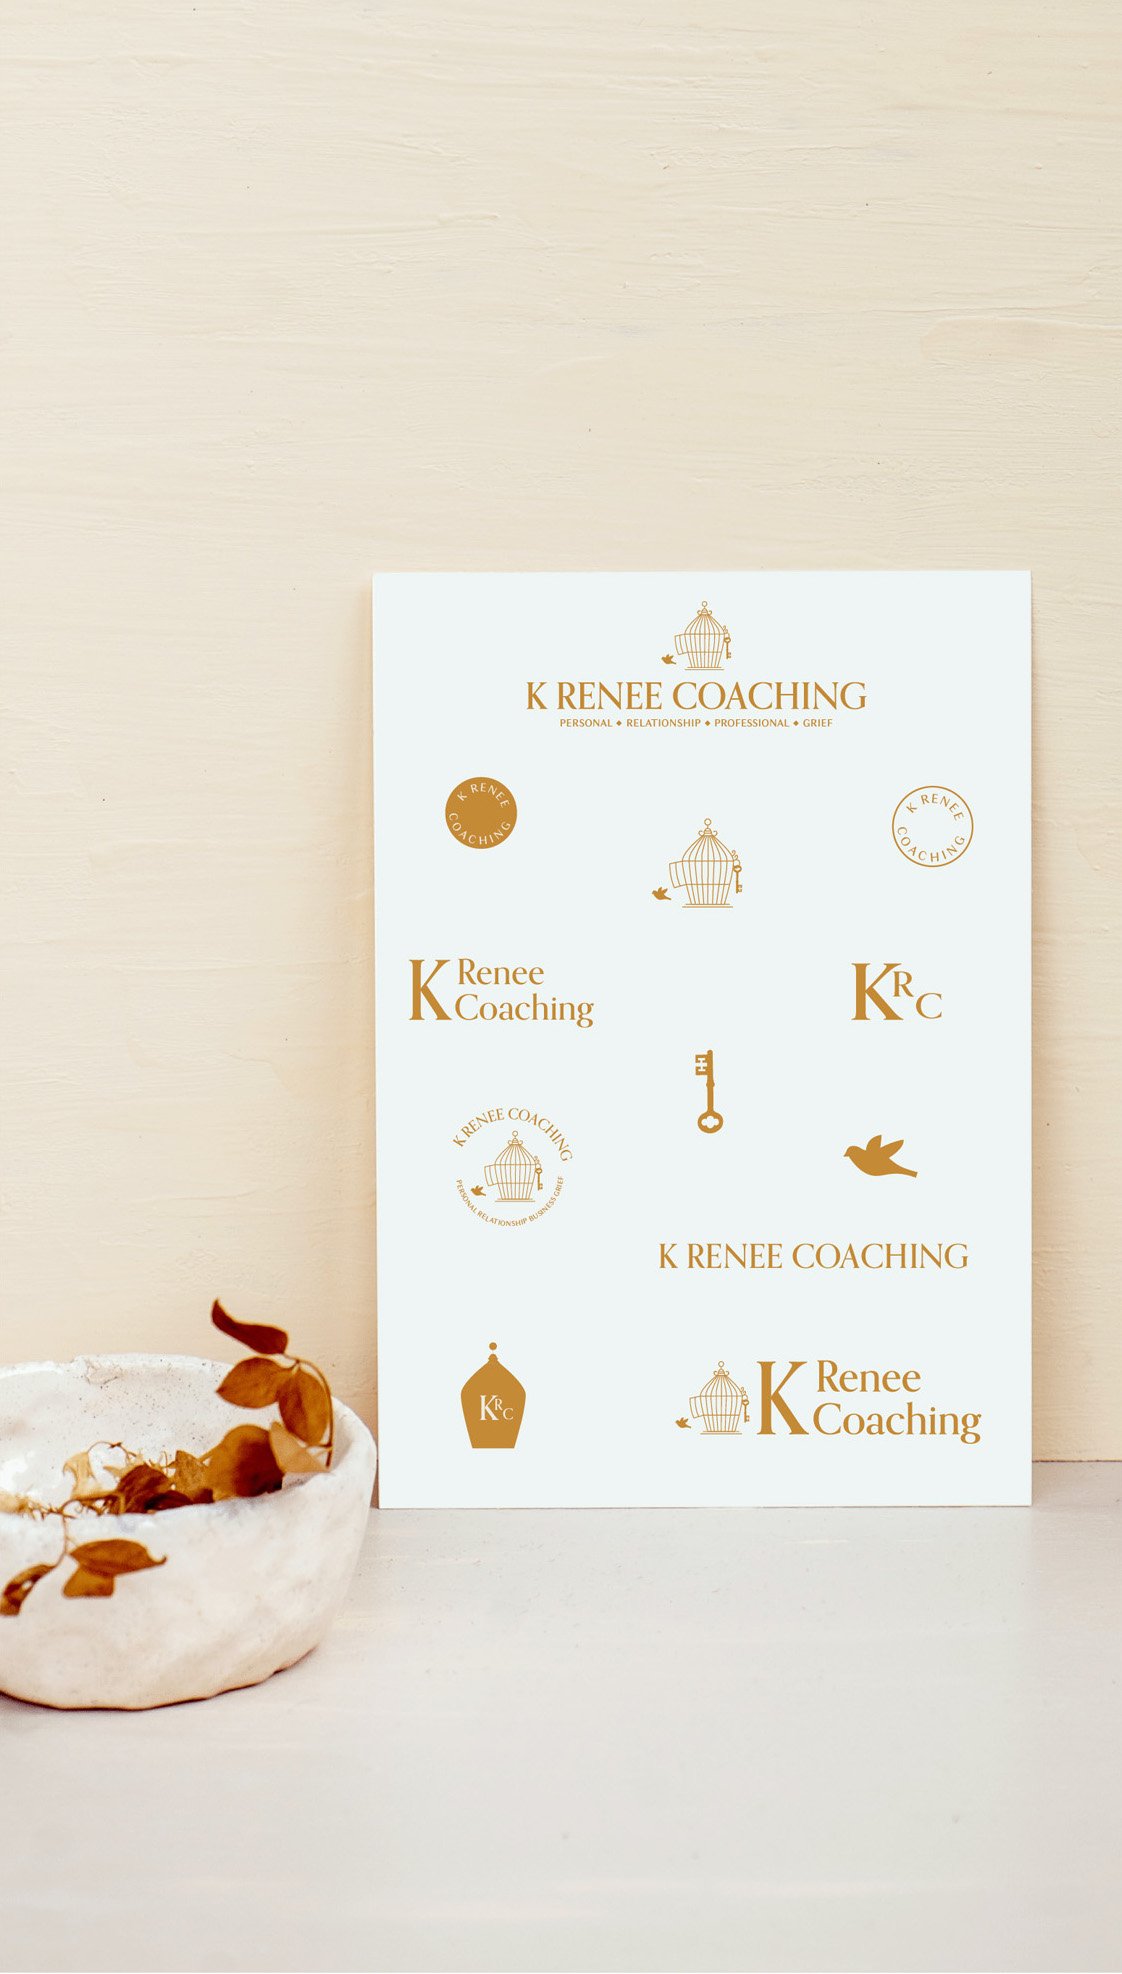 Those-Moment-Design-Co-K-Renee-Coaching-Logo-Variations